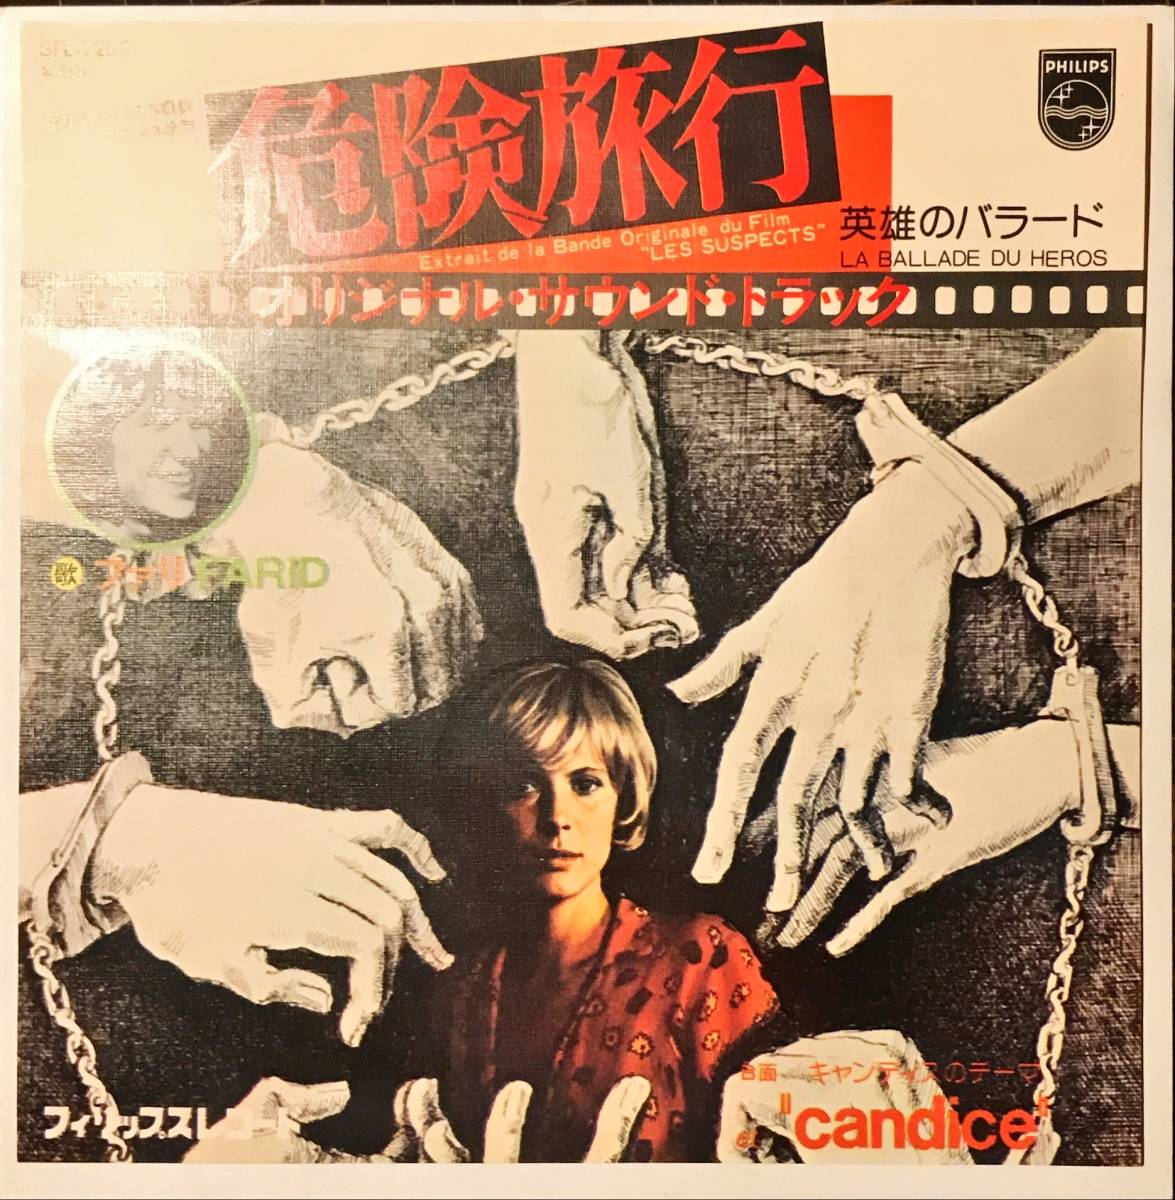 [ audition ] Japanese record rare movie soundtrack 45sfali// dangerous travel / hero. Ballade [EP] France Les Suspects OST domestic record Franois De Roubaix 7